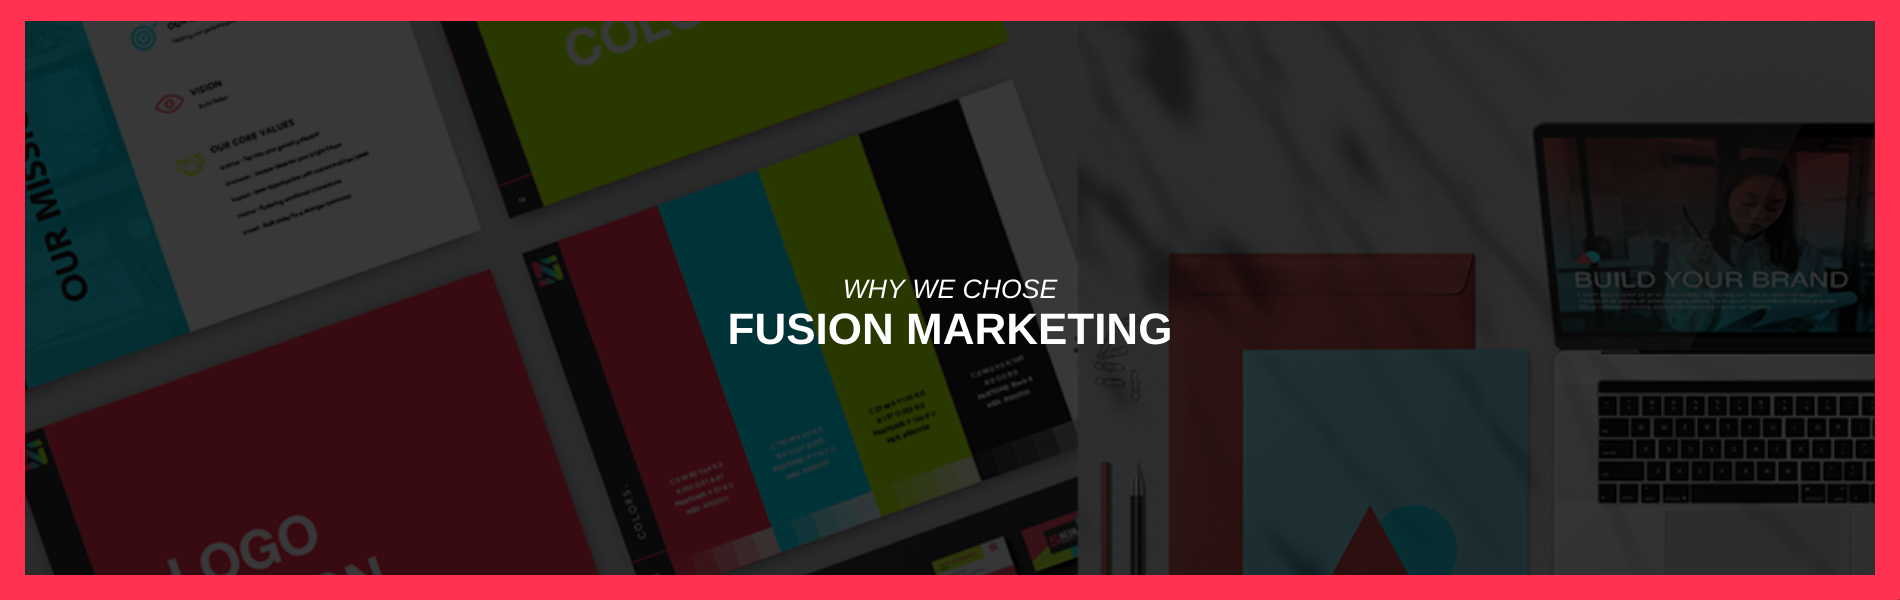 Why We Chose Fusion Marketing